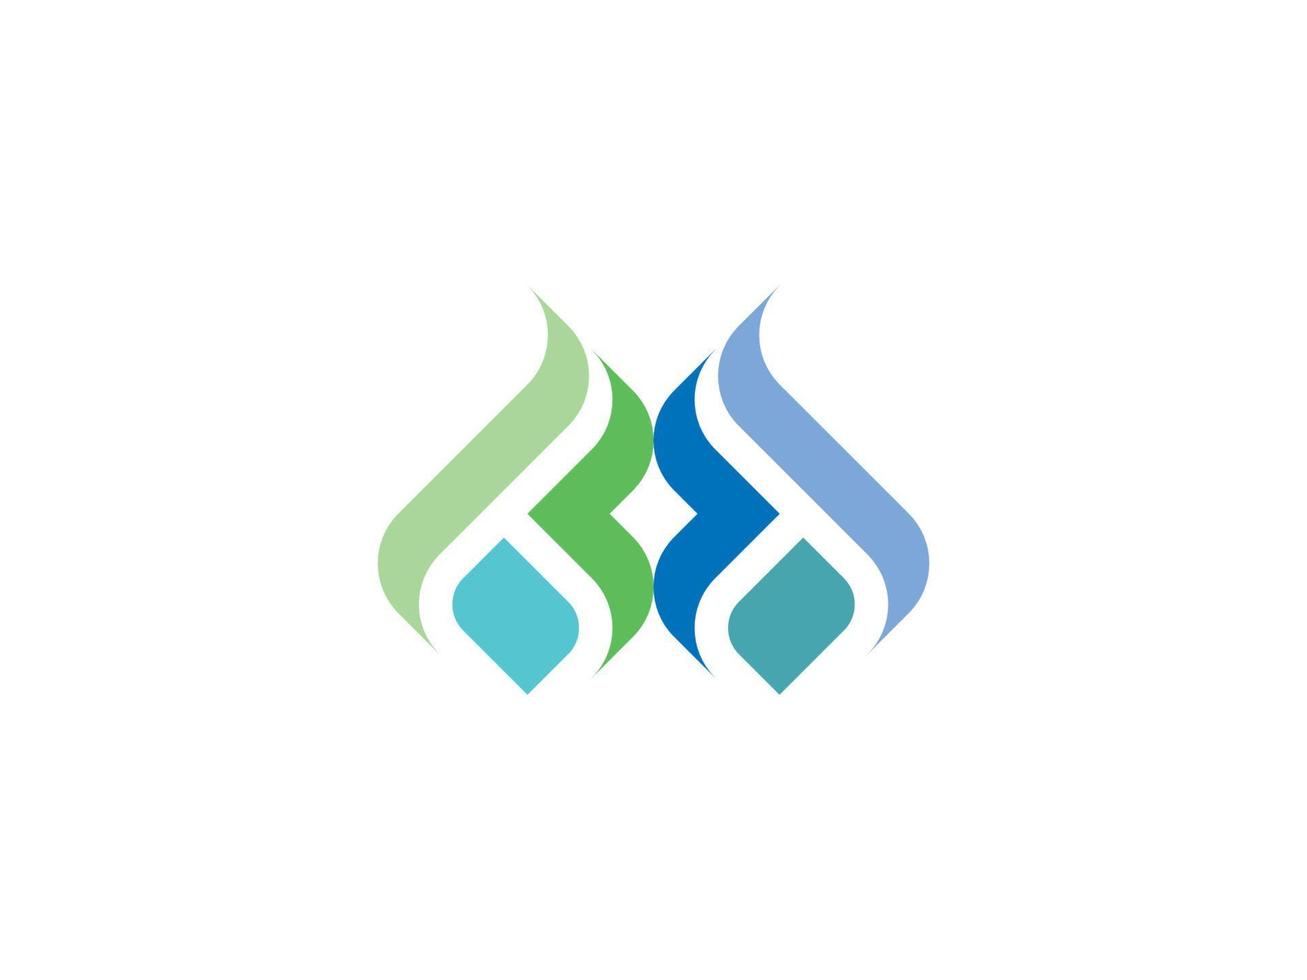 farbenfroher abstrakter Logo-Template-Design-Vektor kostenlos vektor